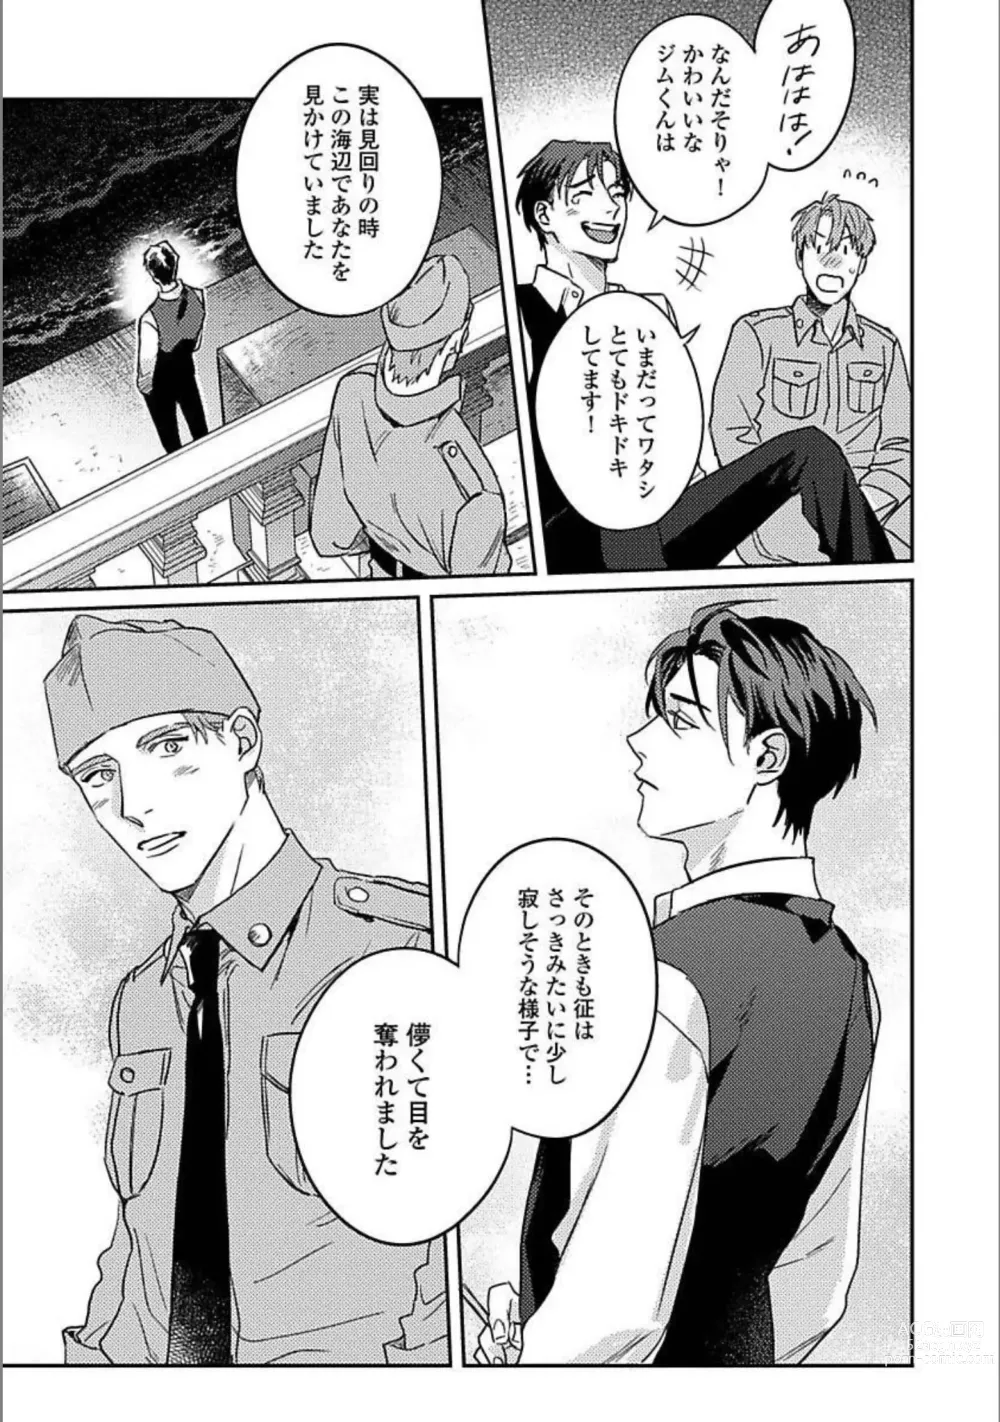 Page 26 of manga Hitori de Yoru wa Koerarenai - I Cant Stand Another Night Alone